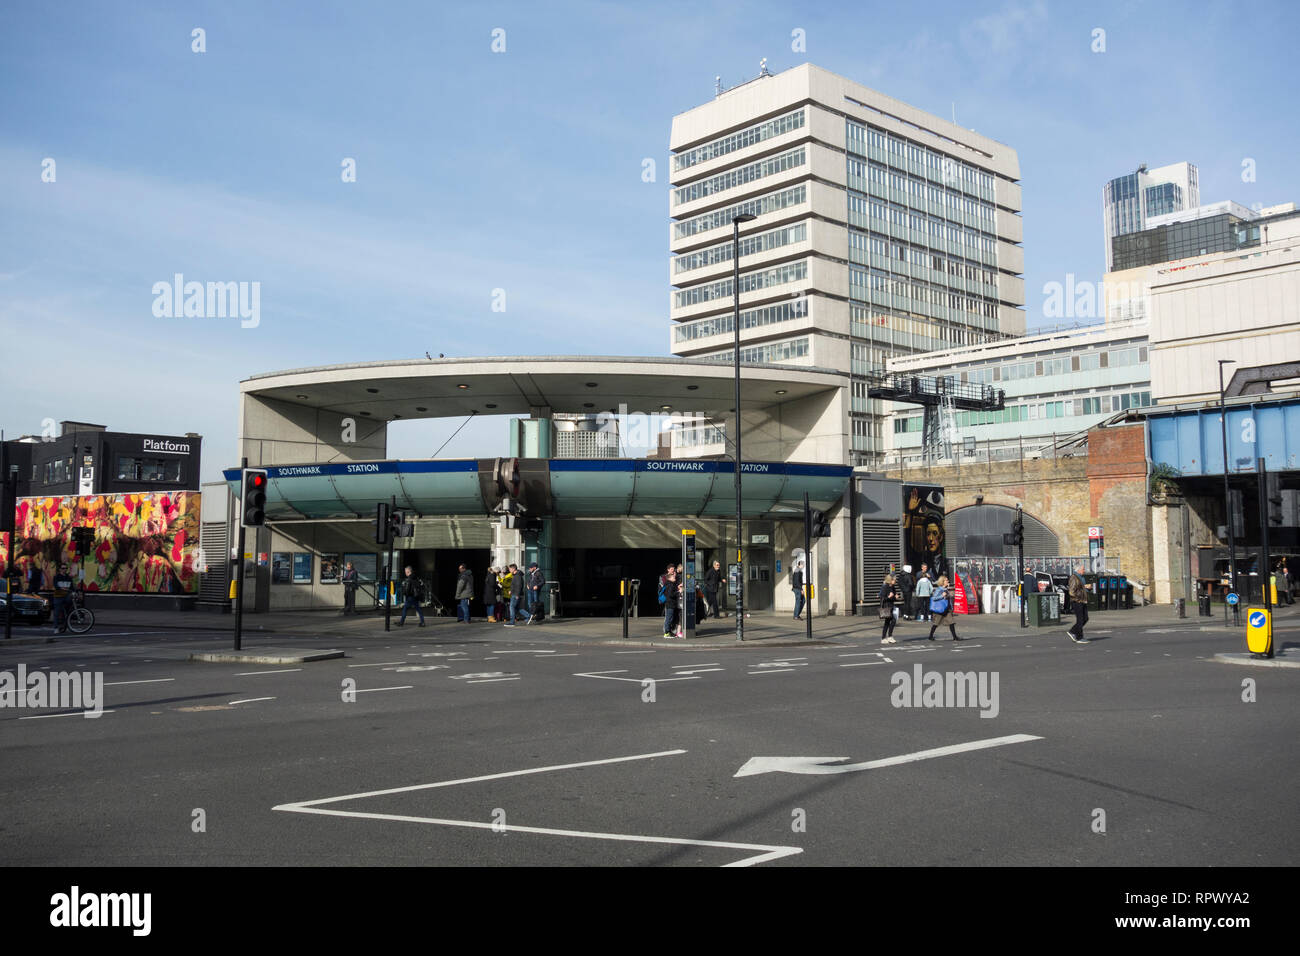 Stazione metropolitana di Southwark Foto Stock